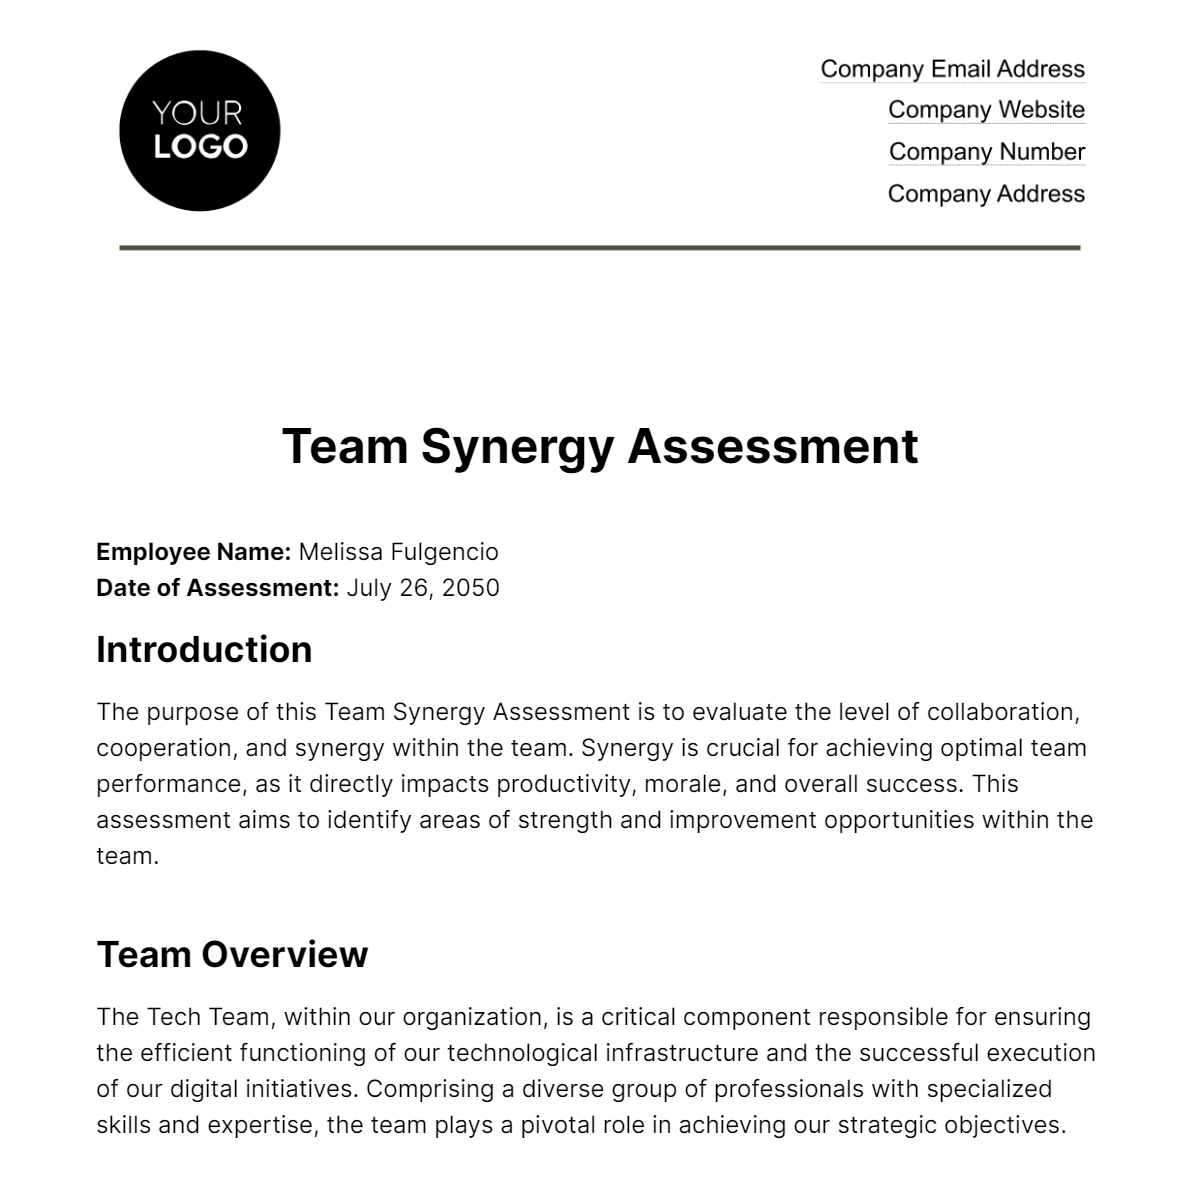 Team Synergy Assessment HR Template